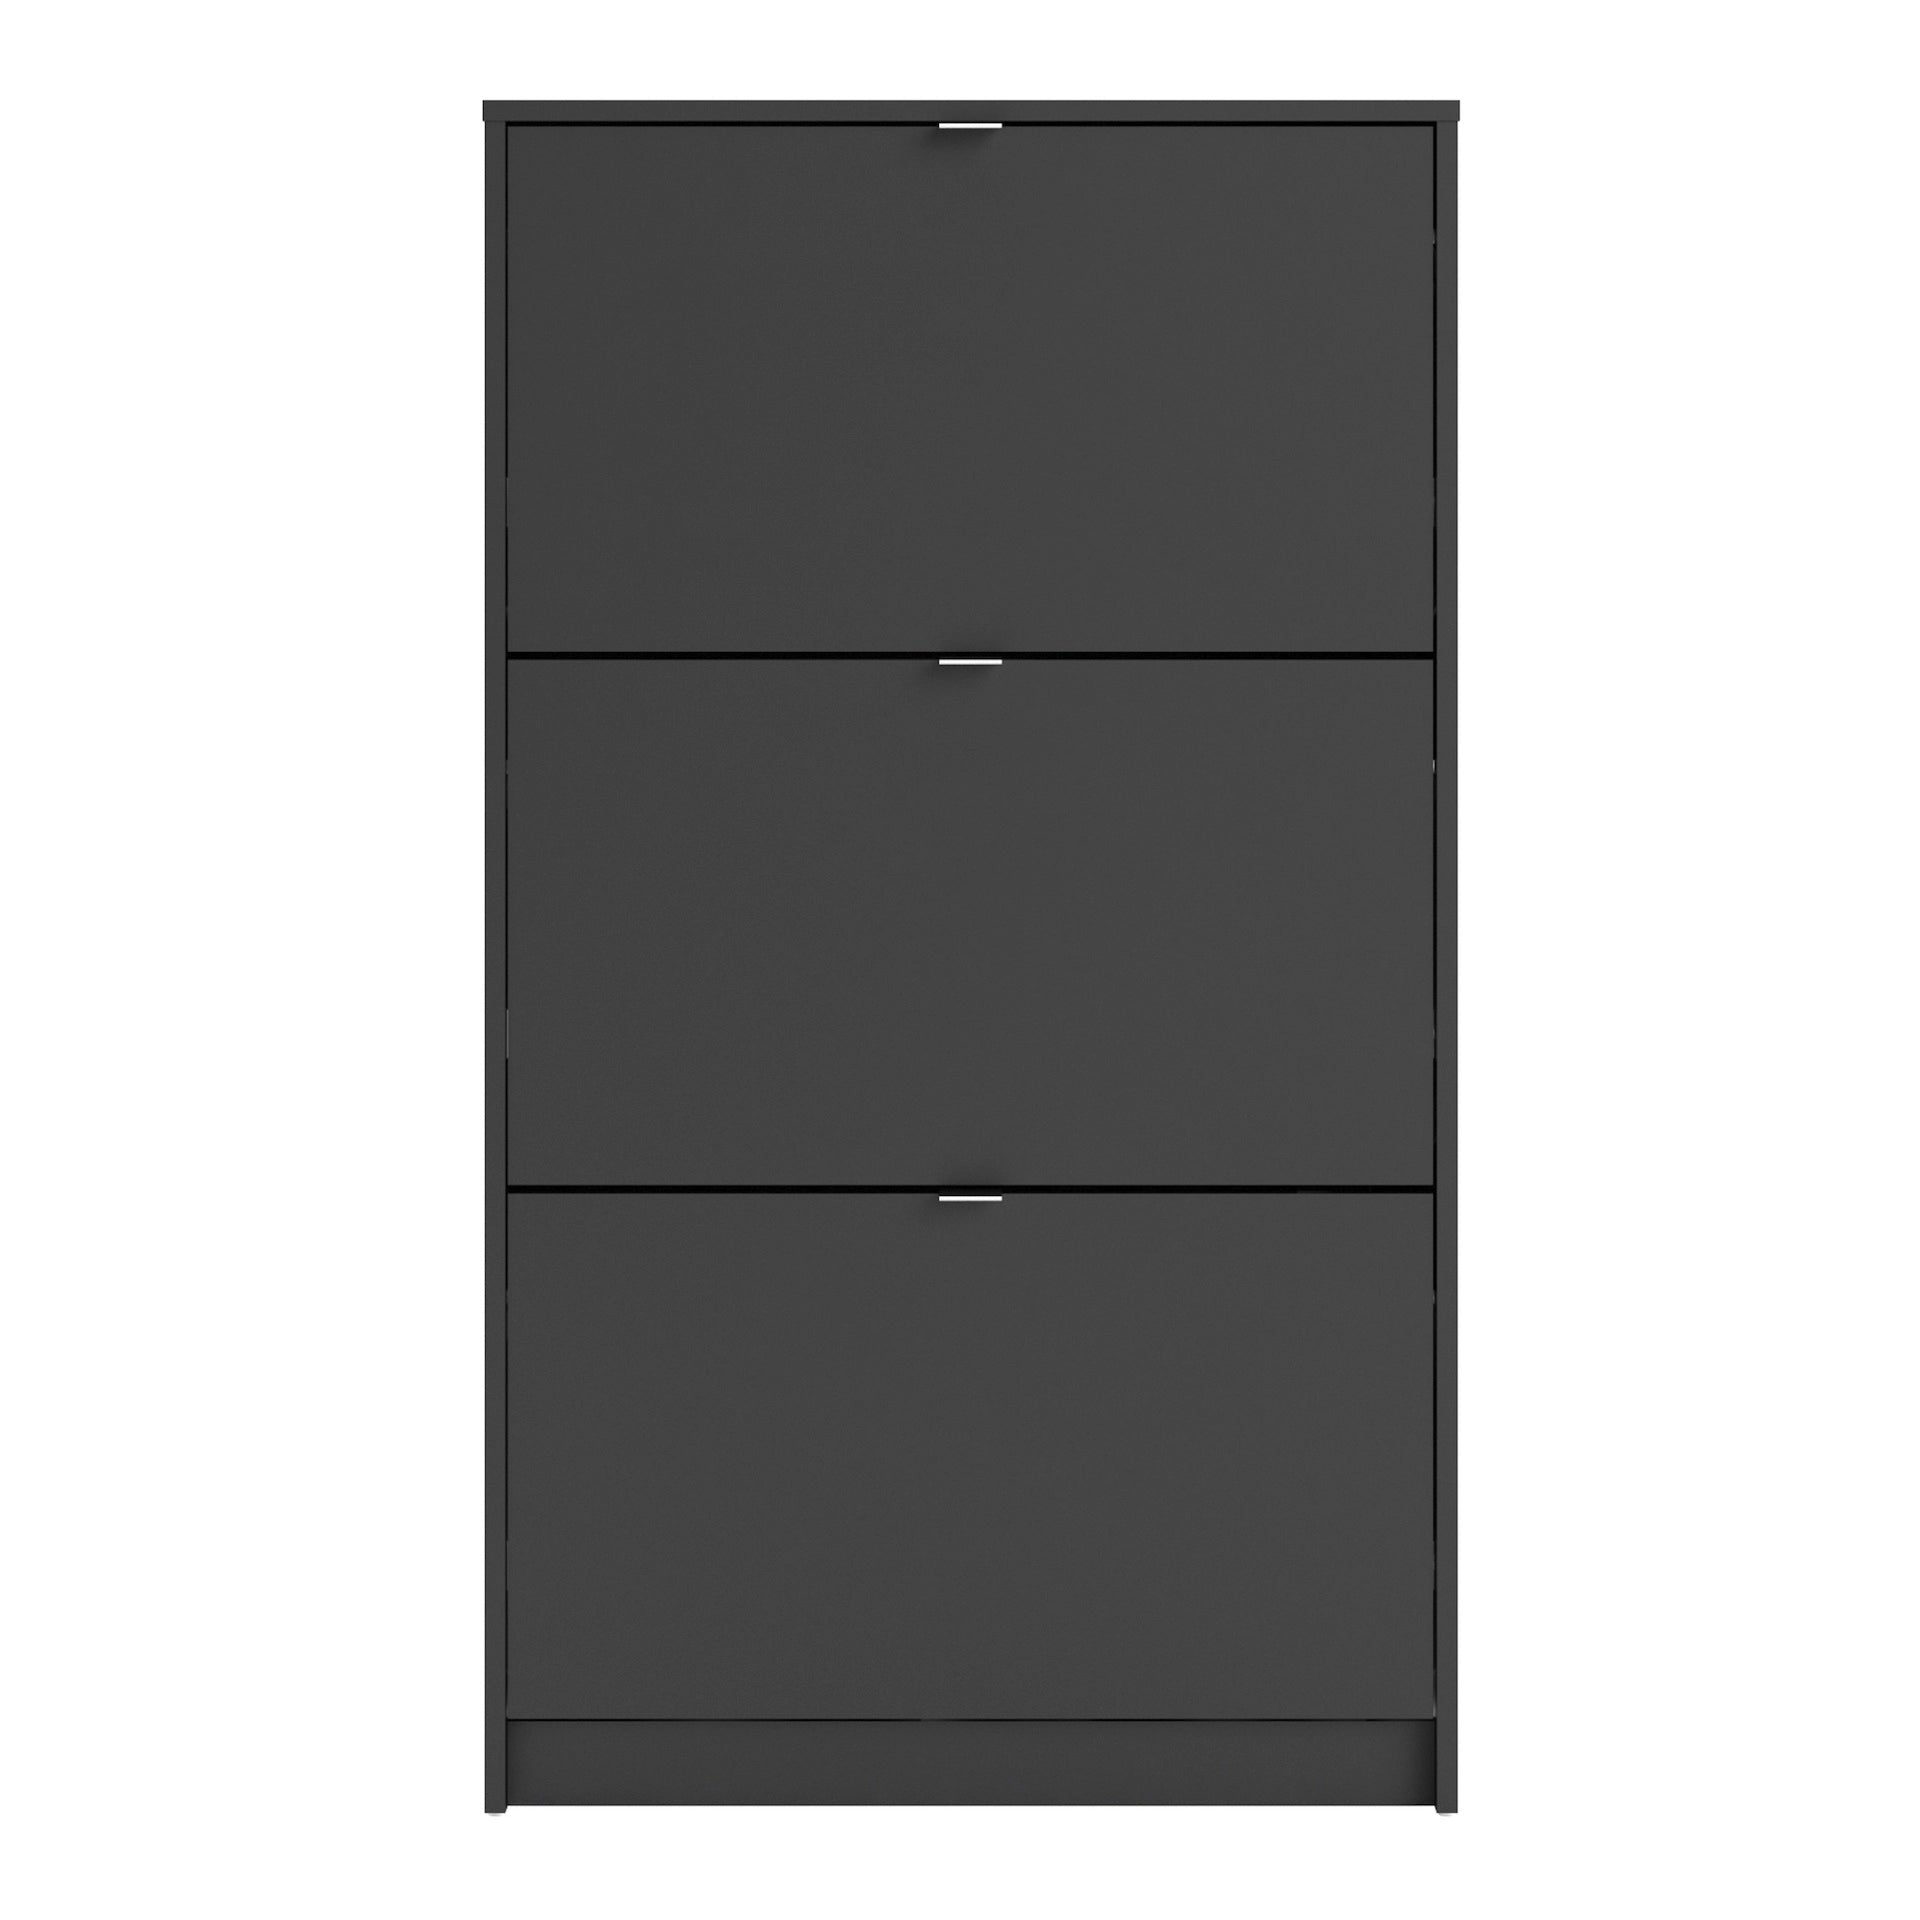 Furniture To Go Shoes Shoe Cabinet W. 3 Tilting Doors & 2 Layers in Matt Black